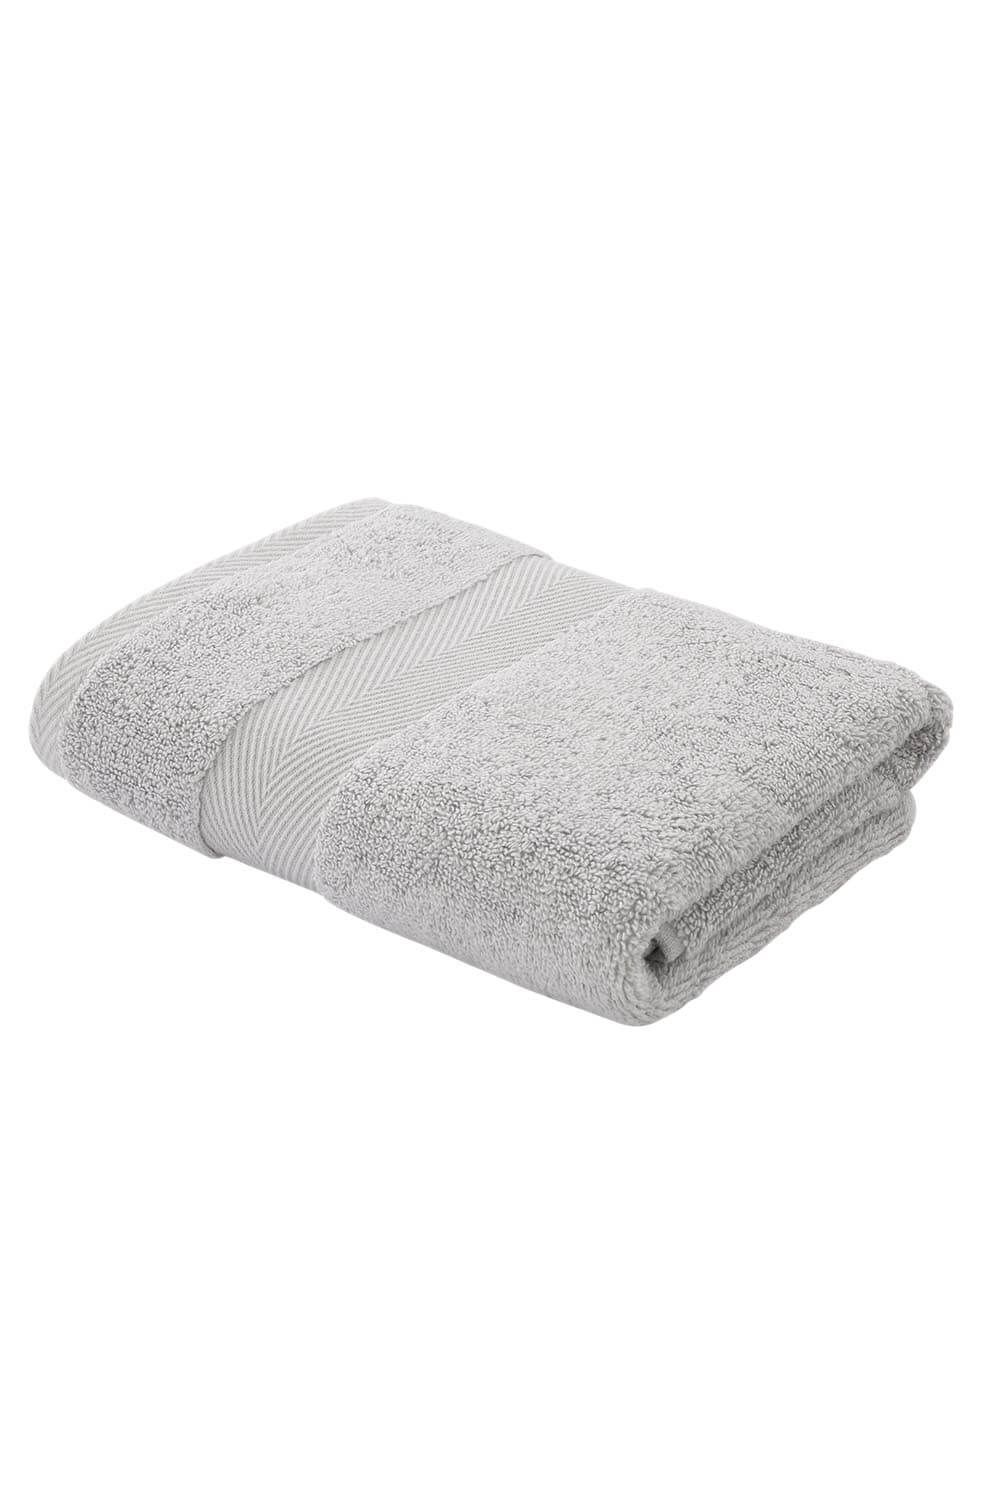 Bianca Silk Hand Towel 50cm x 90cm - Dove Grey 1 Shaws Department Stores